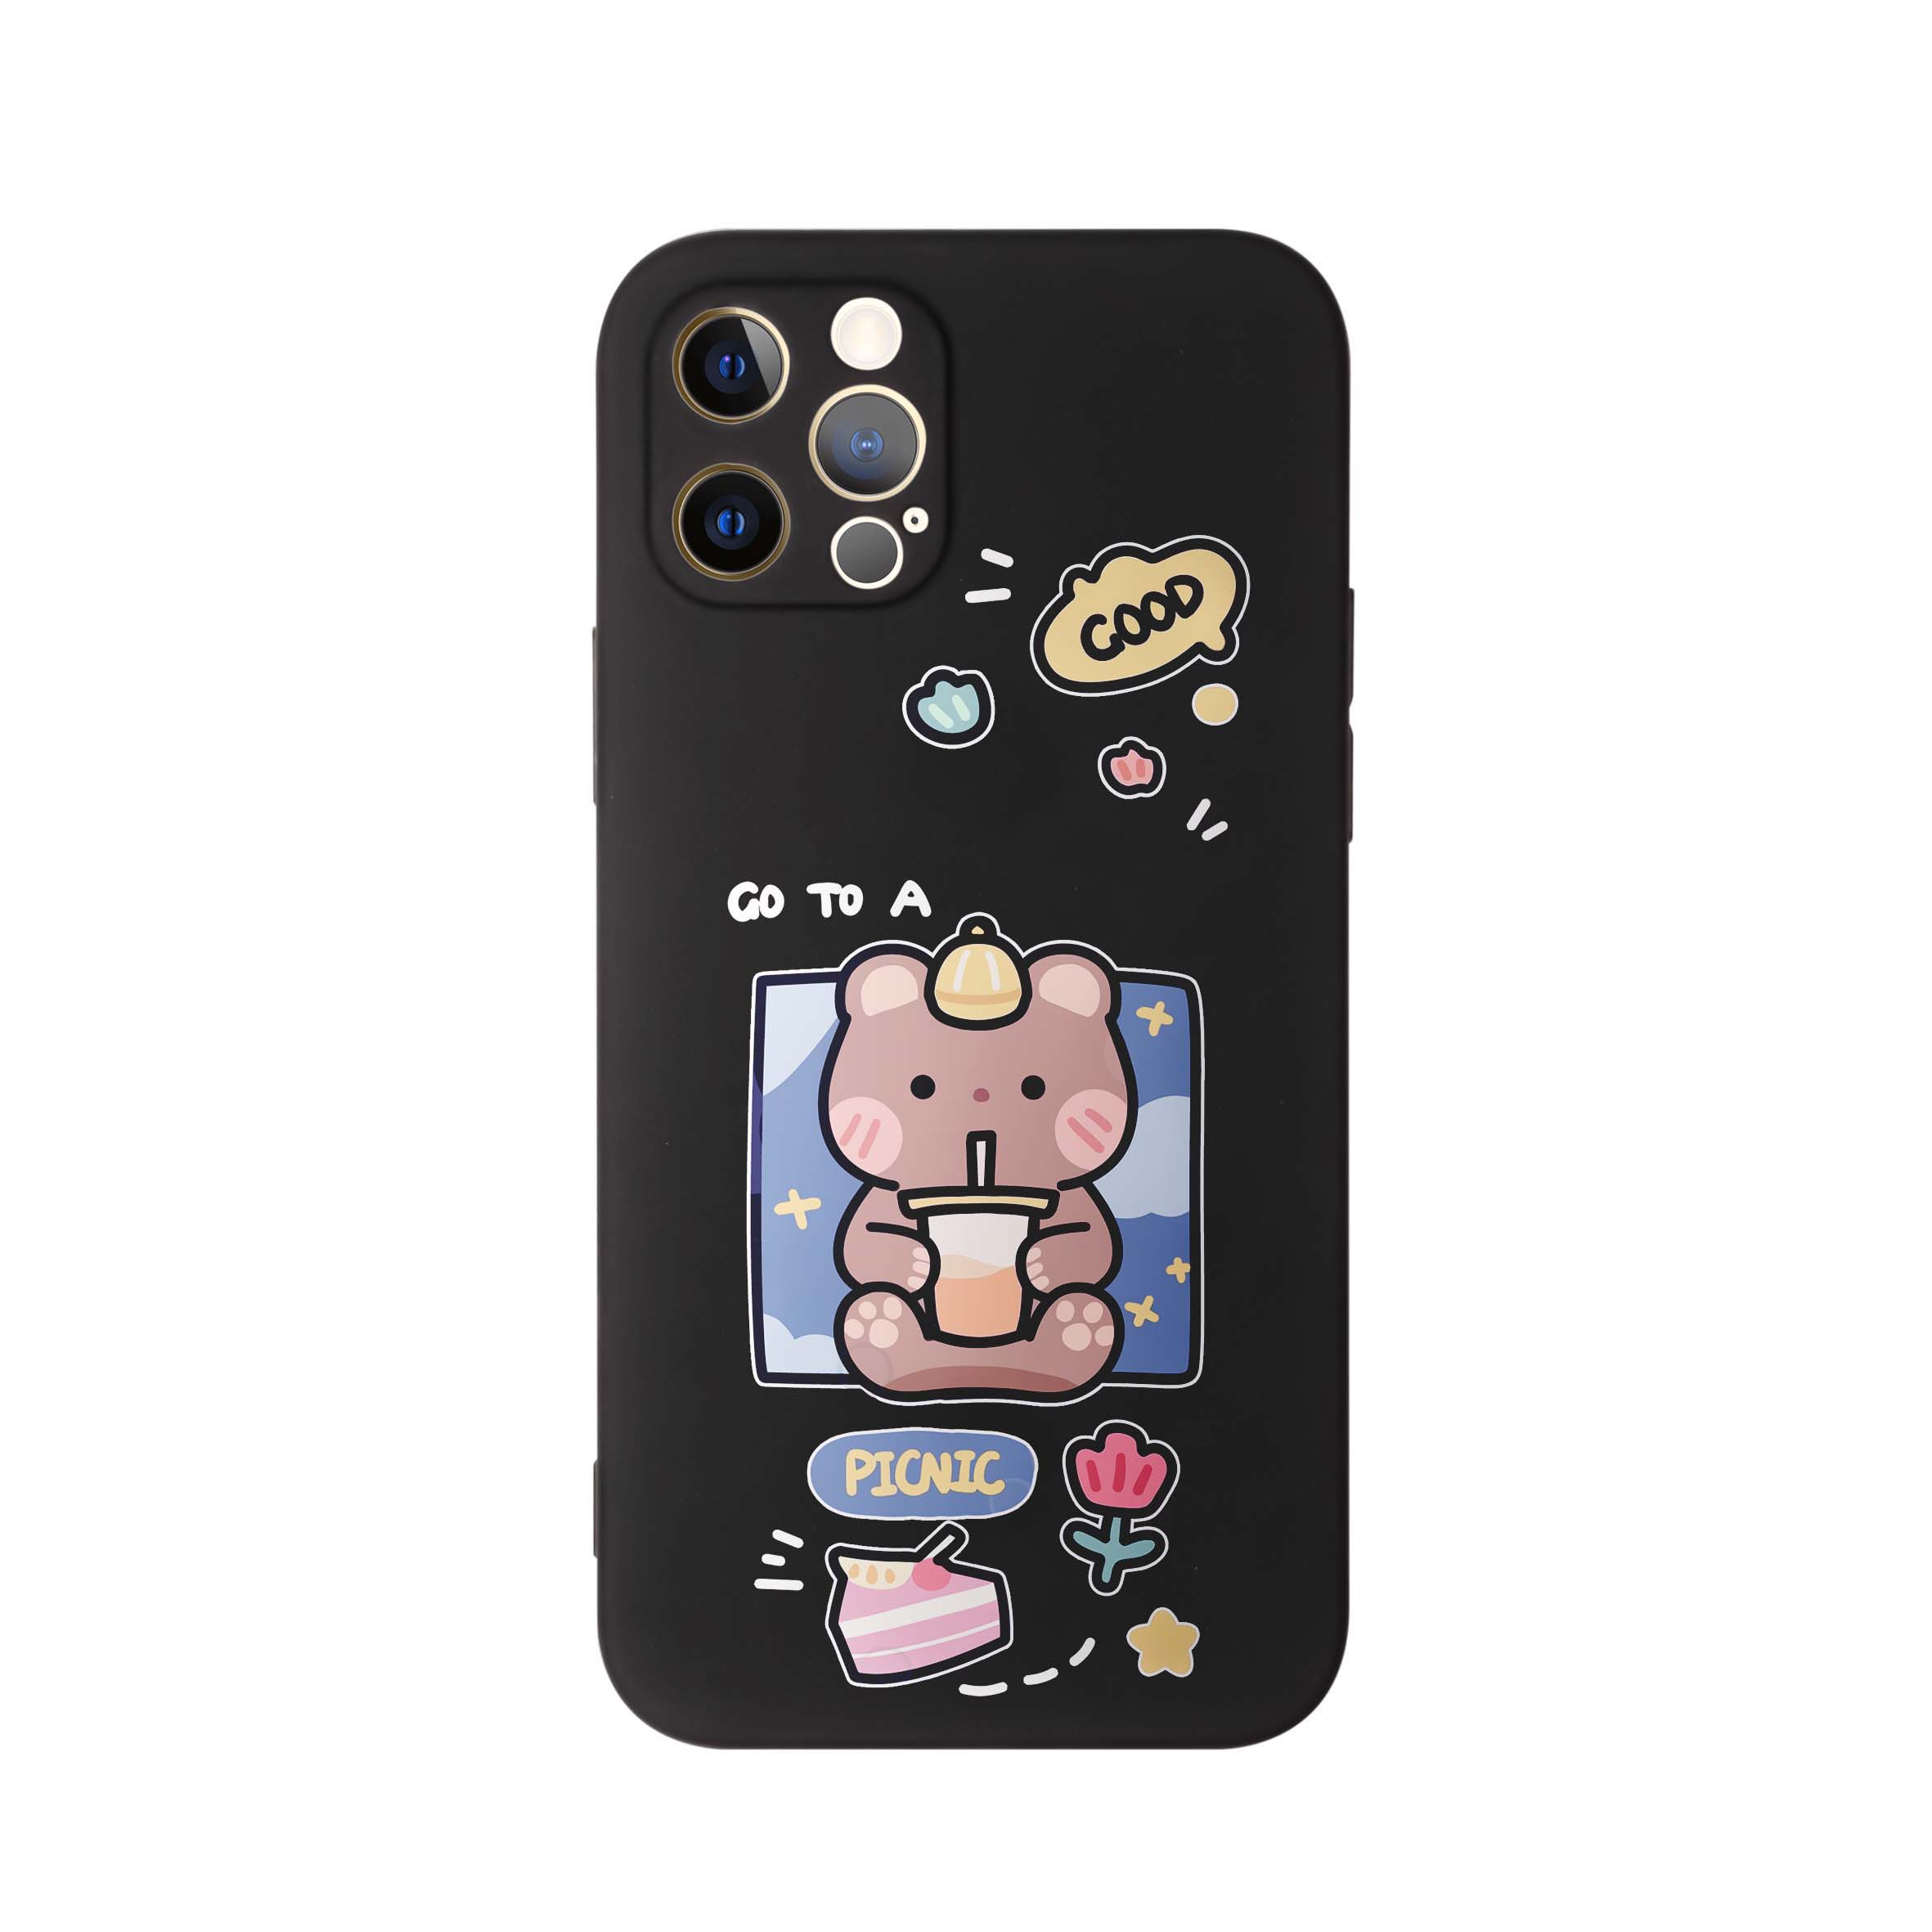 کاور طرح خرس شکمو کد m4330 مناسب برای گوشی موبایل اپل iphone 11 Pro